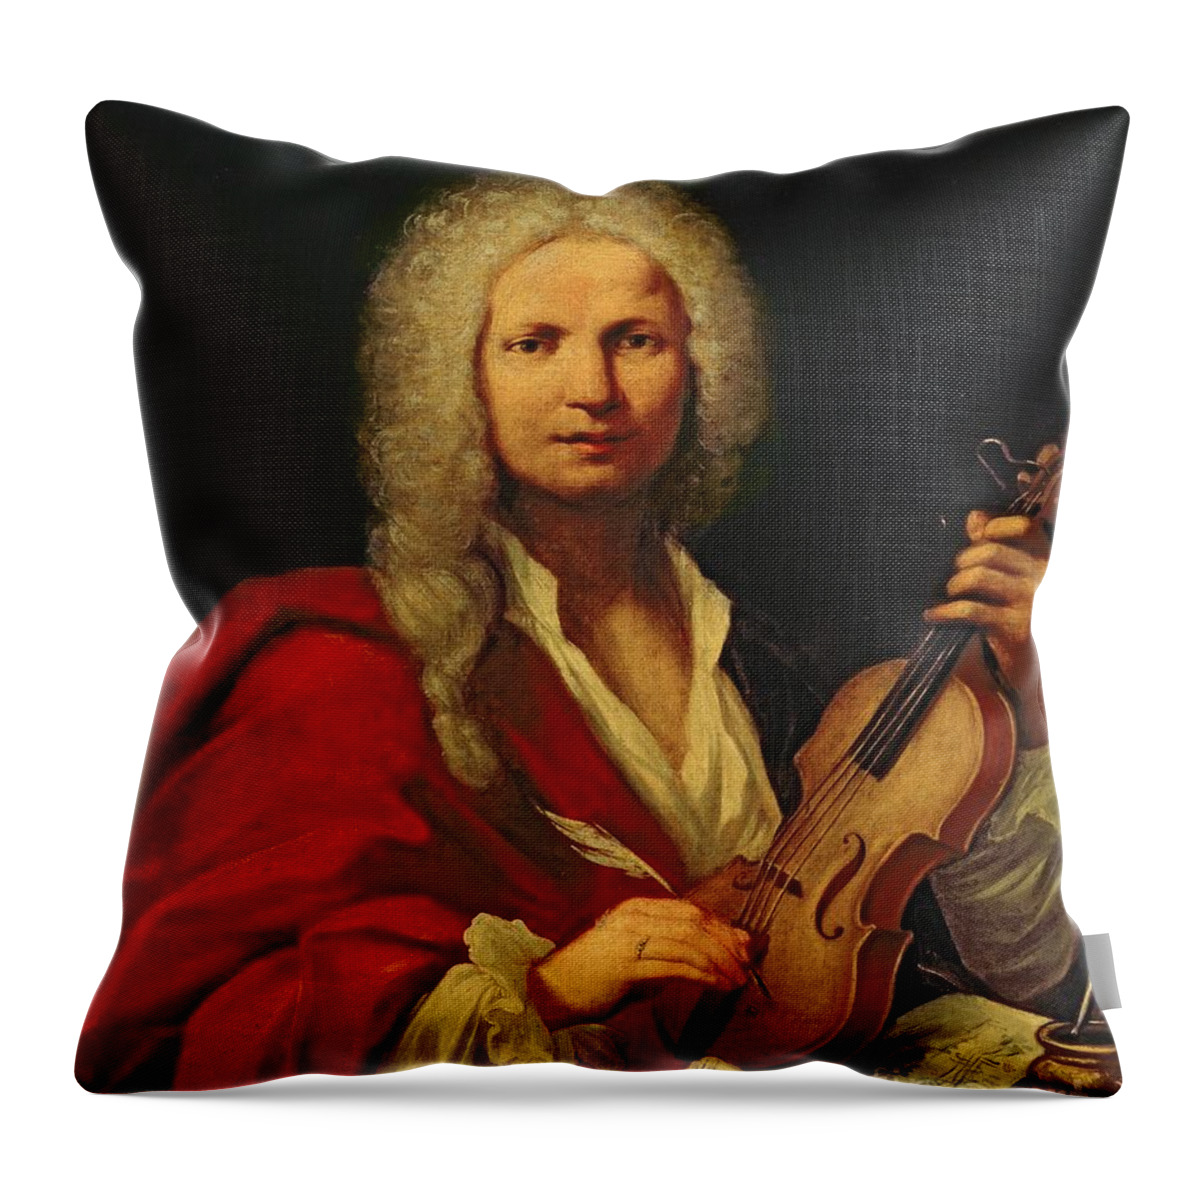 Italian Composer Throw Pillow featuring the painting Portrait of Antonio Vivaldi by Italian School